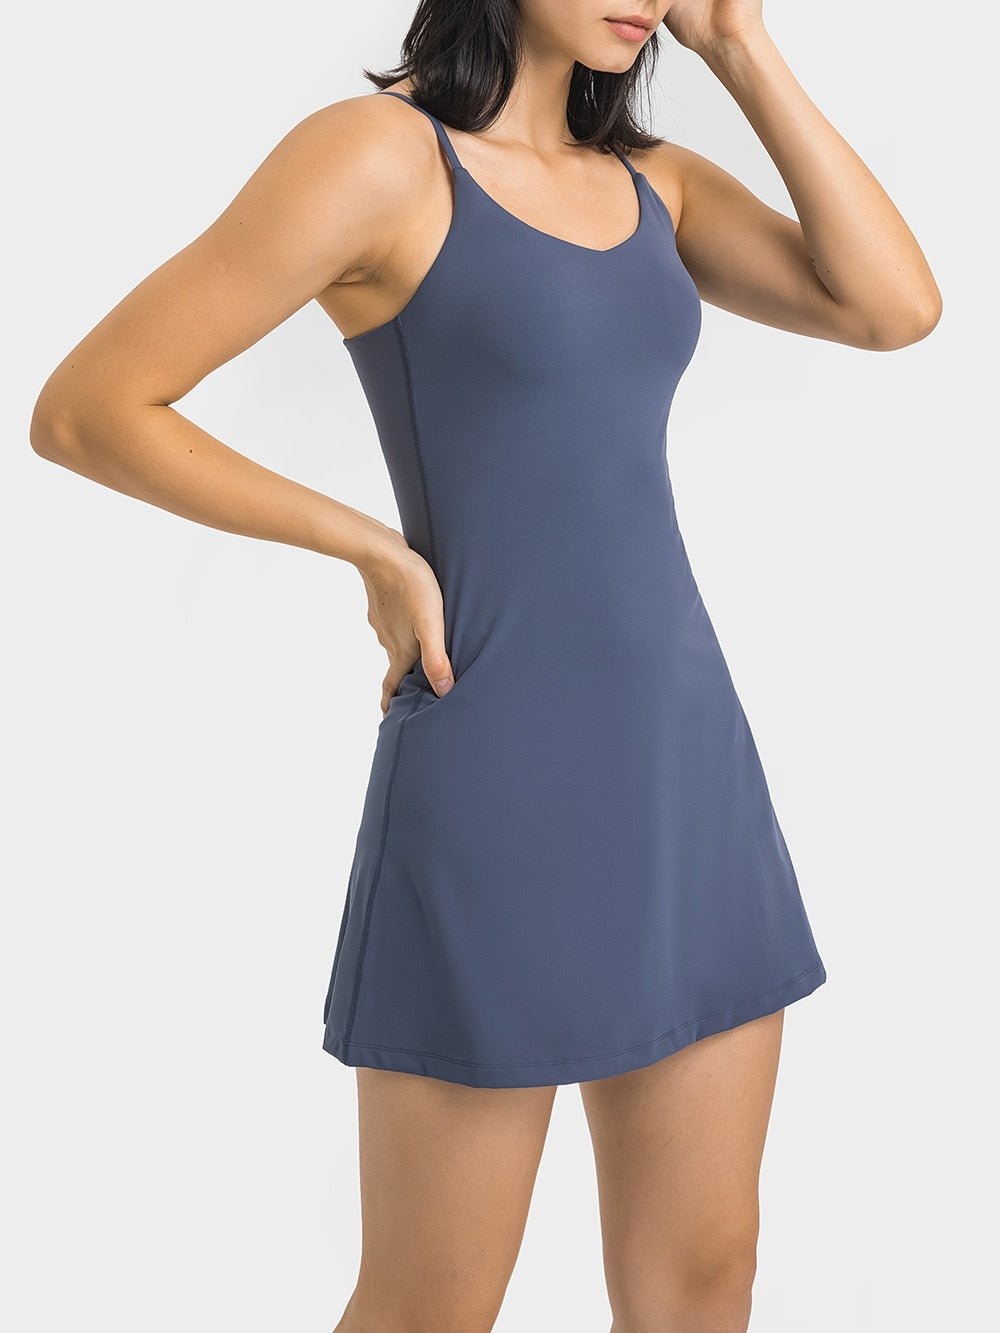 JAFINSY Women One Shoulder Workout Tennis Dress with Bra